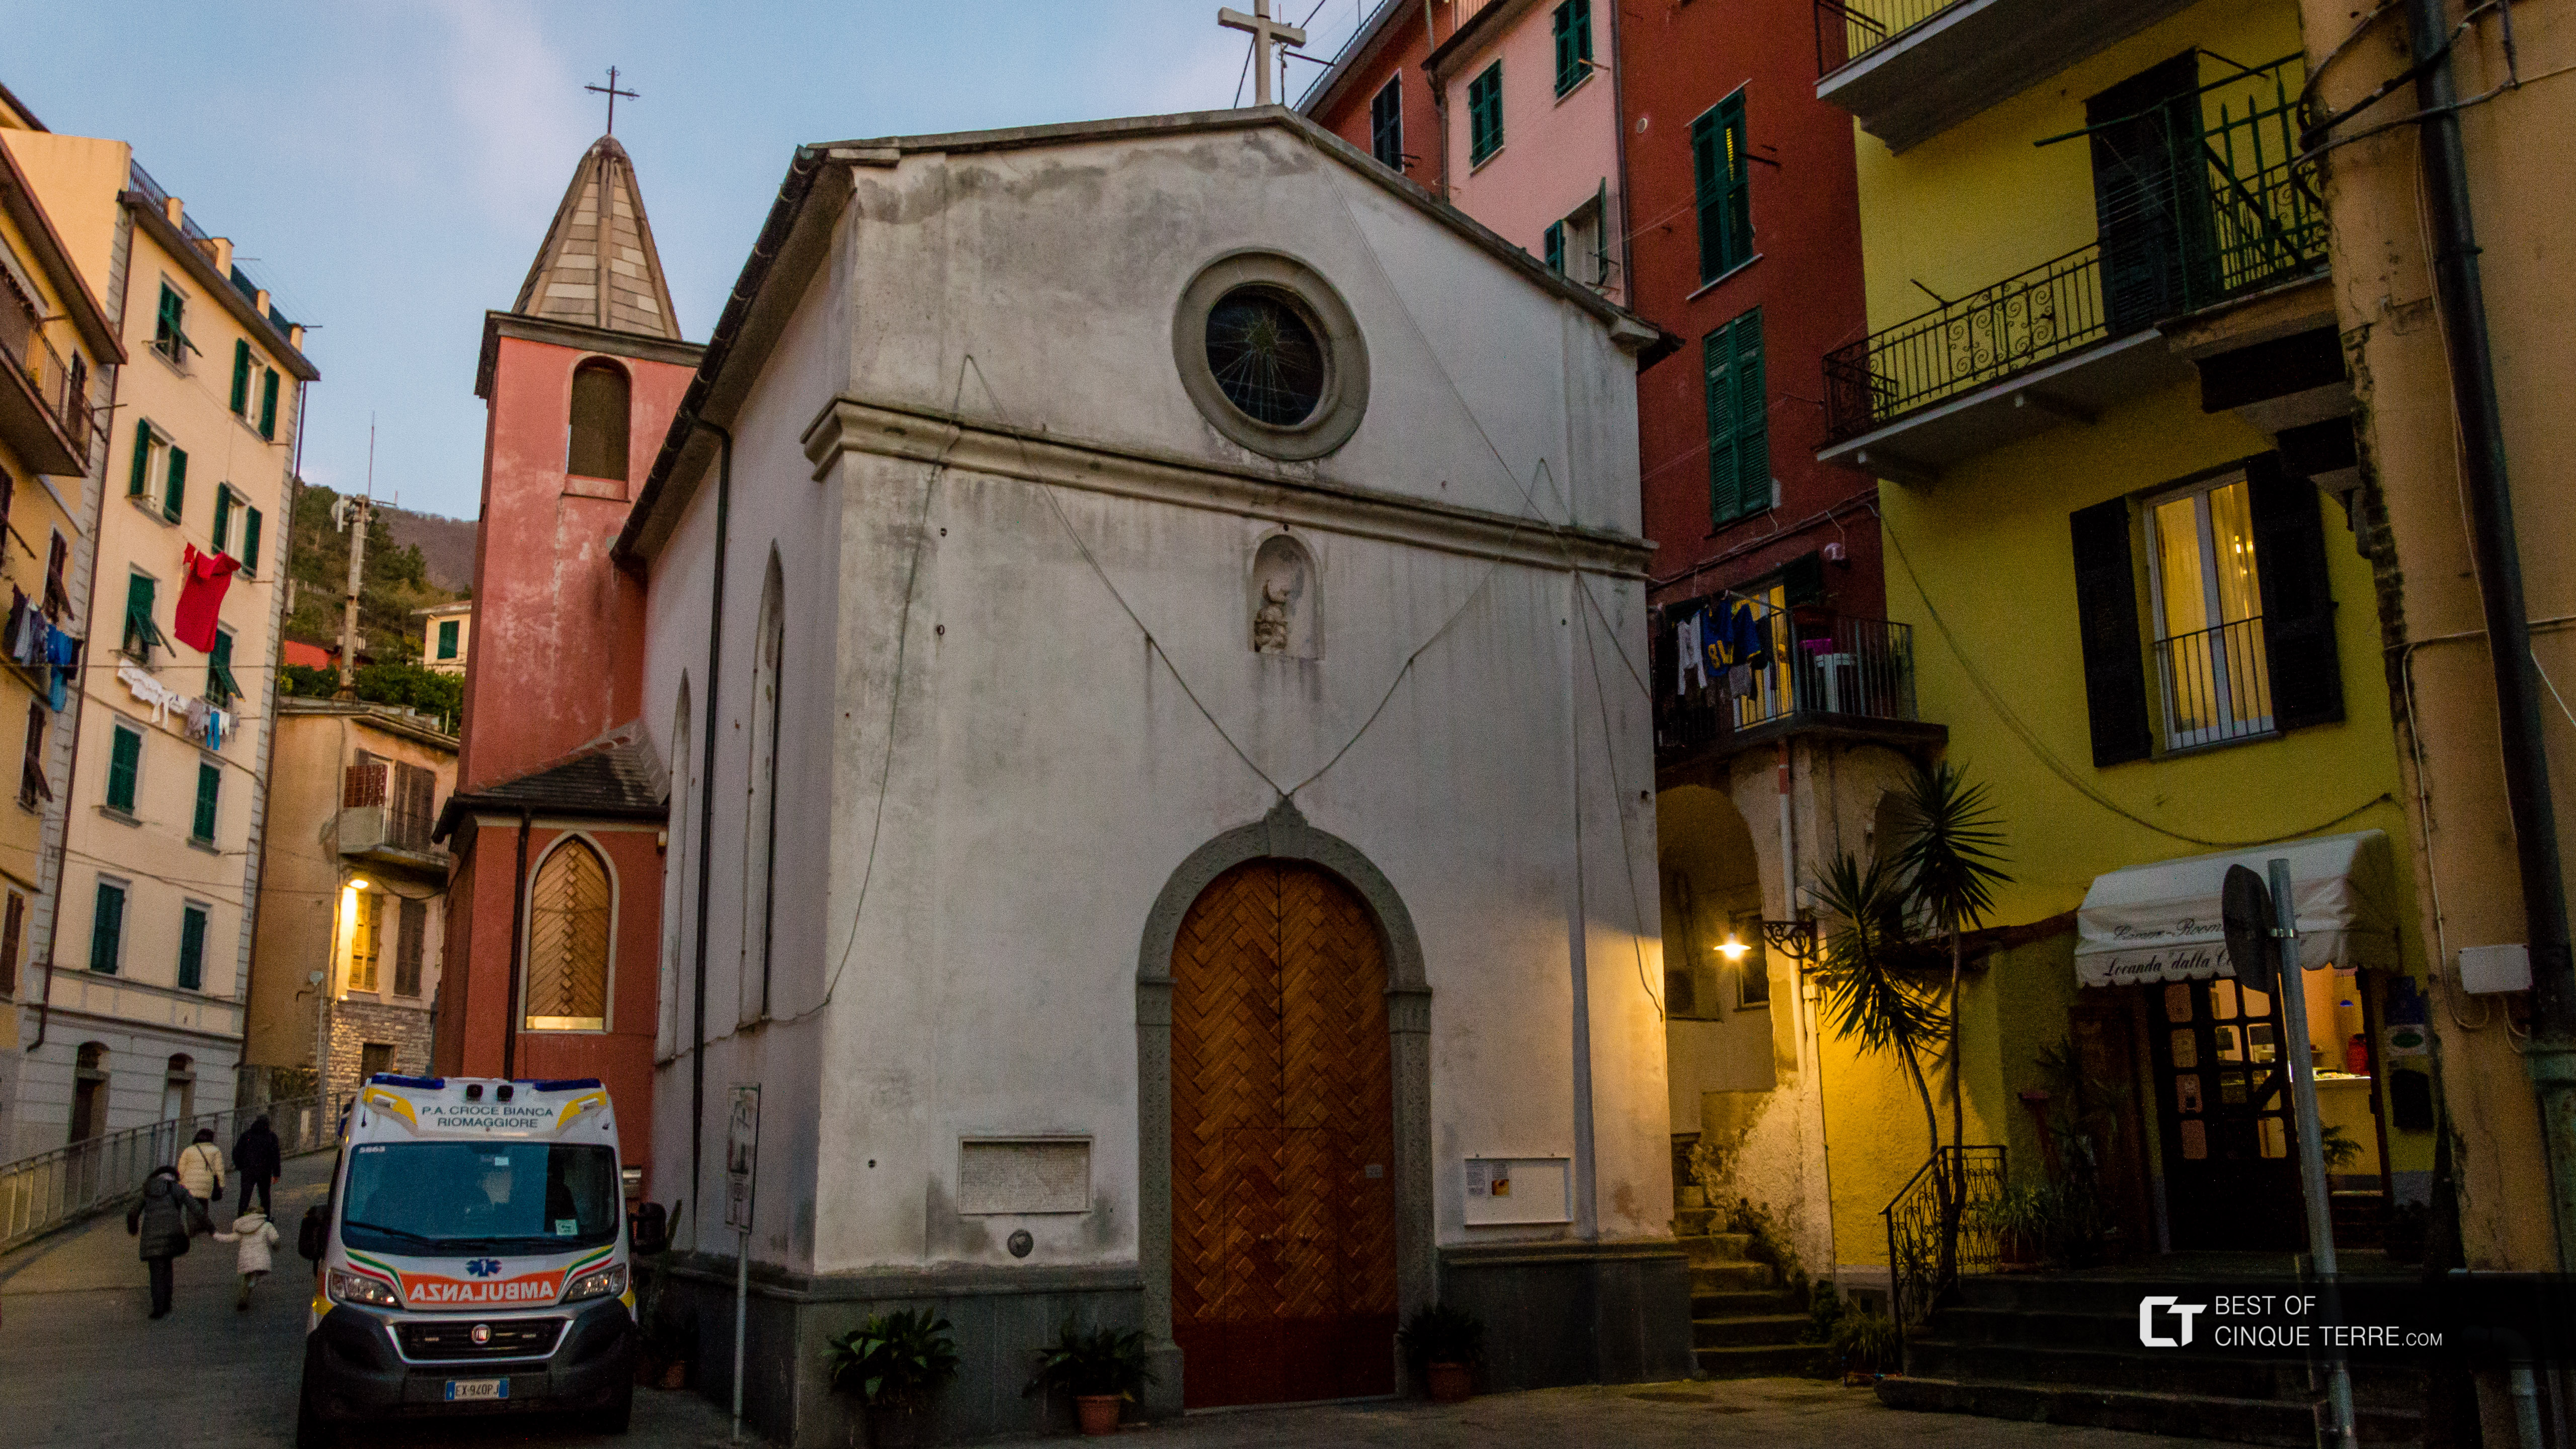 Oratory of Santa Maria Assunta, Riomaggiore, Cinque Terre, Italy